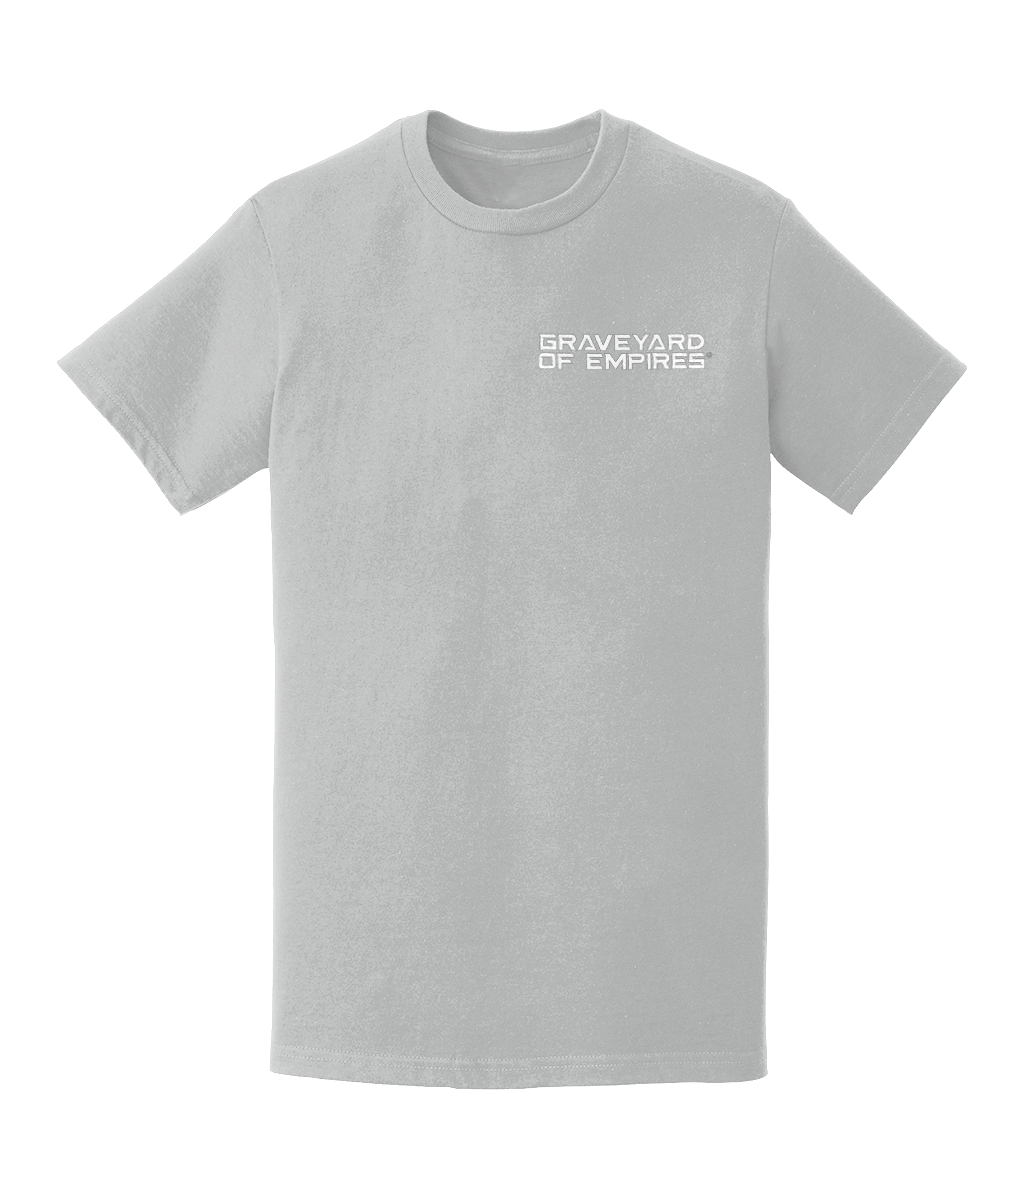 "Palestine" T-Shirt